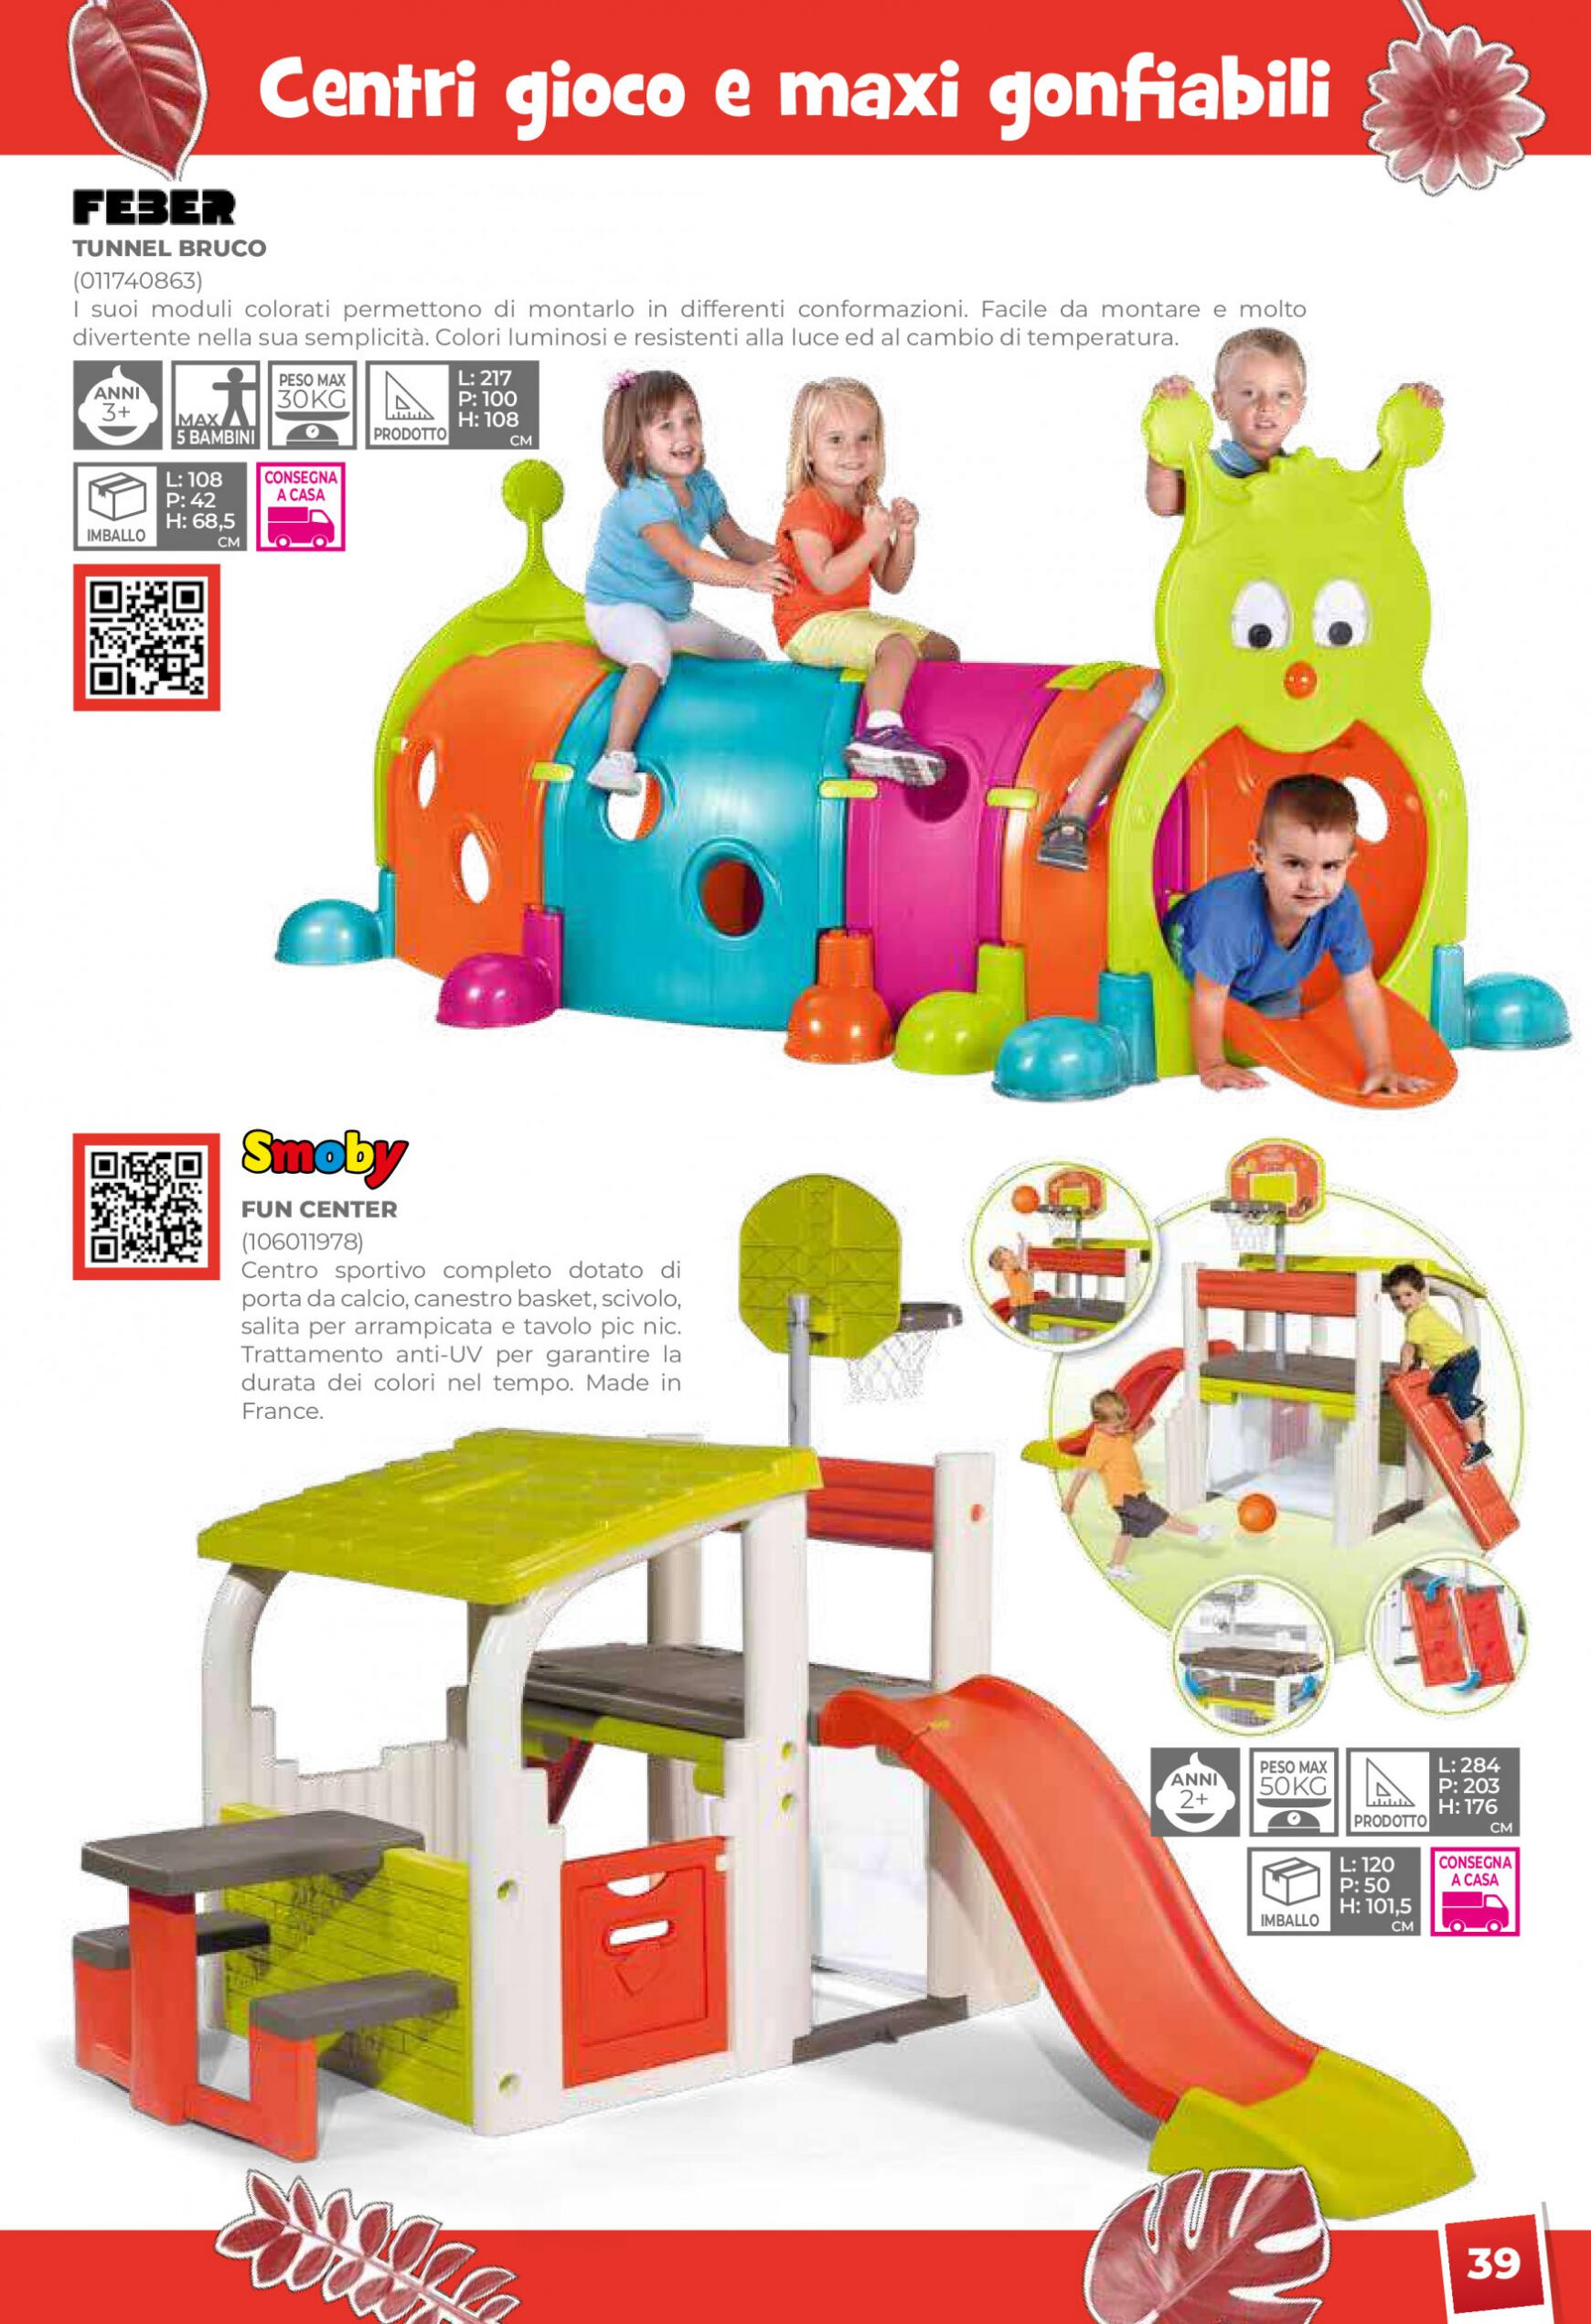 toys-center - Nuovo volantino Toys Center 01.05. - 31.12. - page: 41